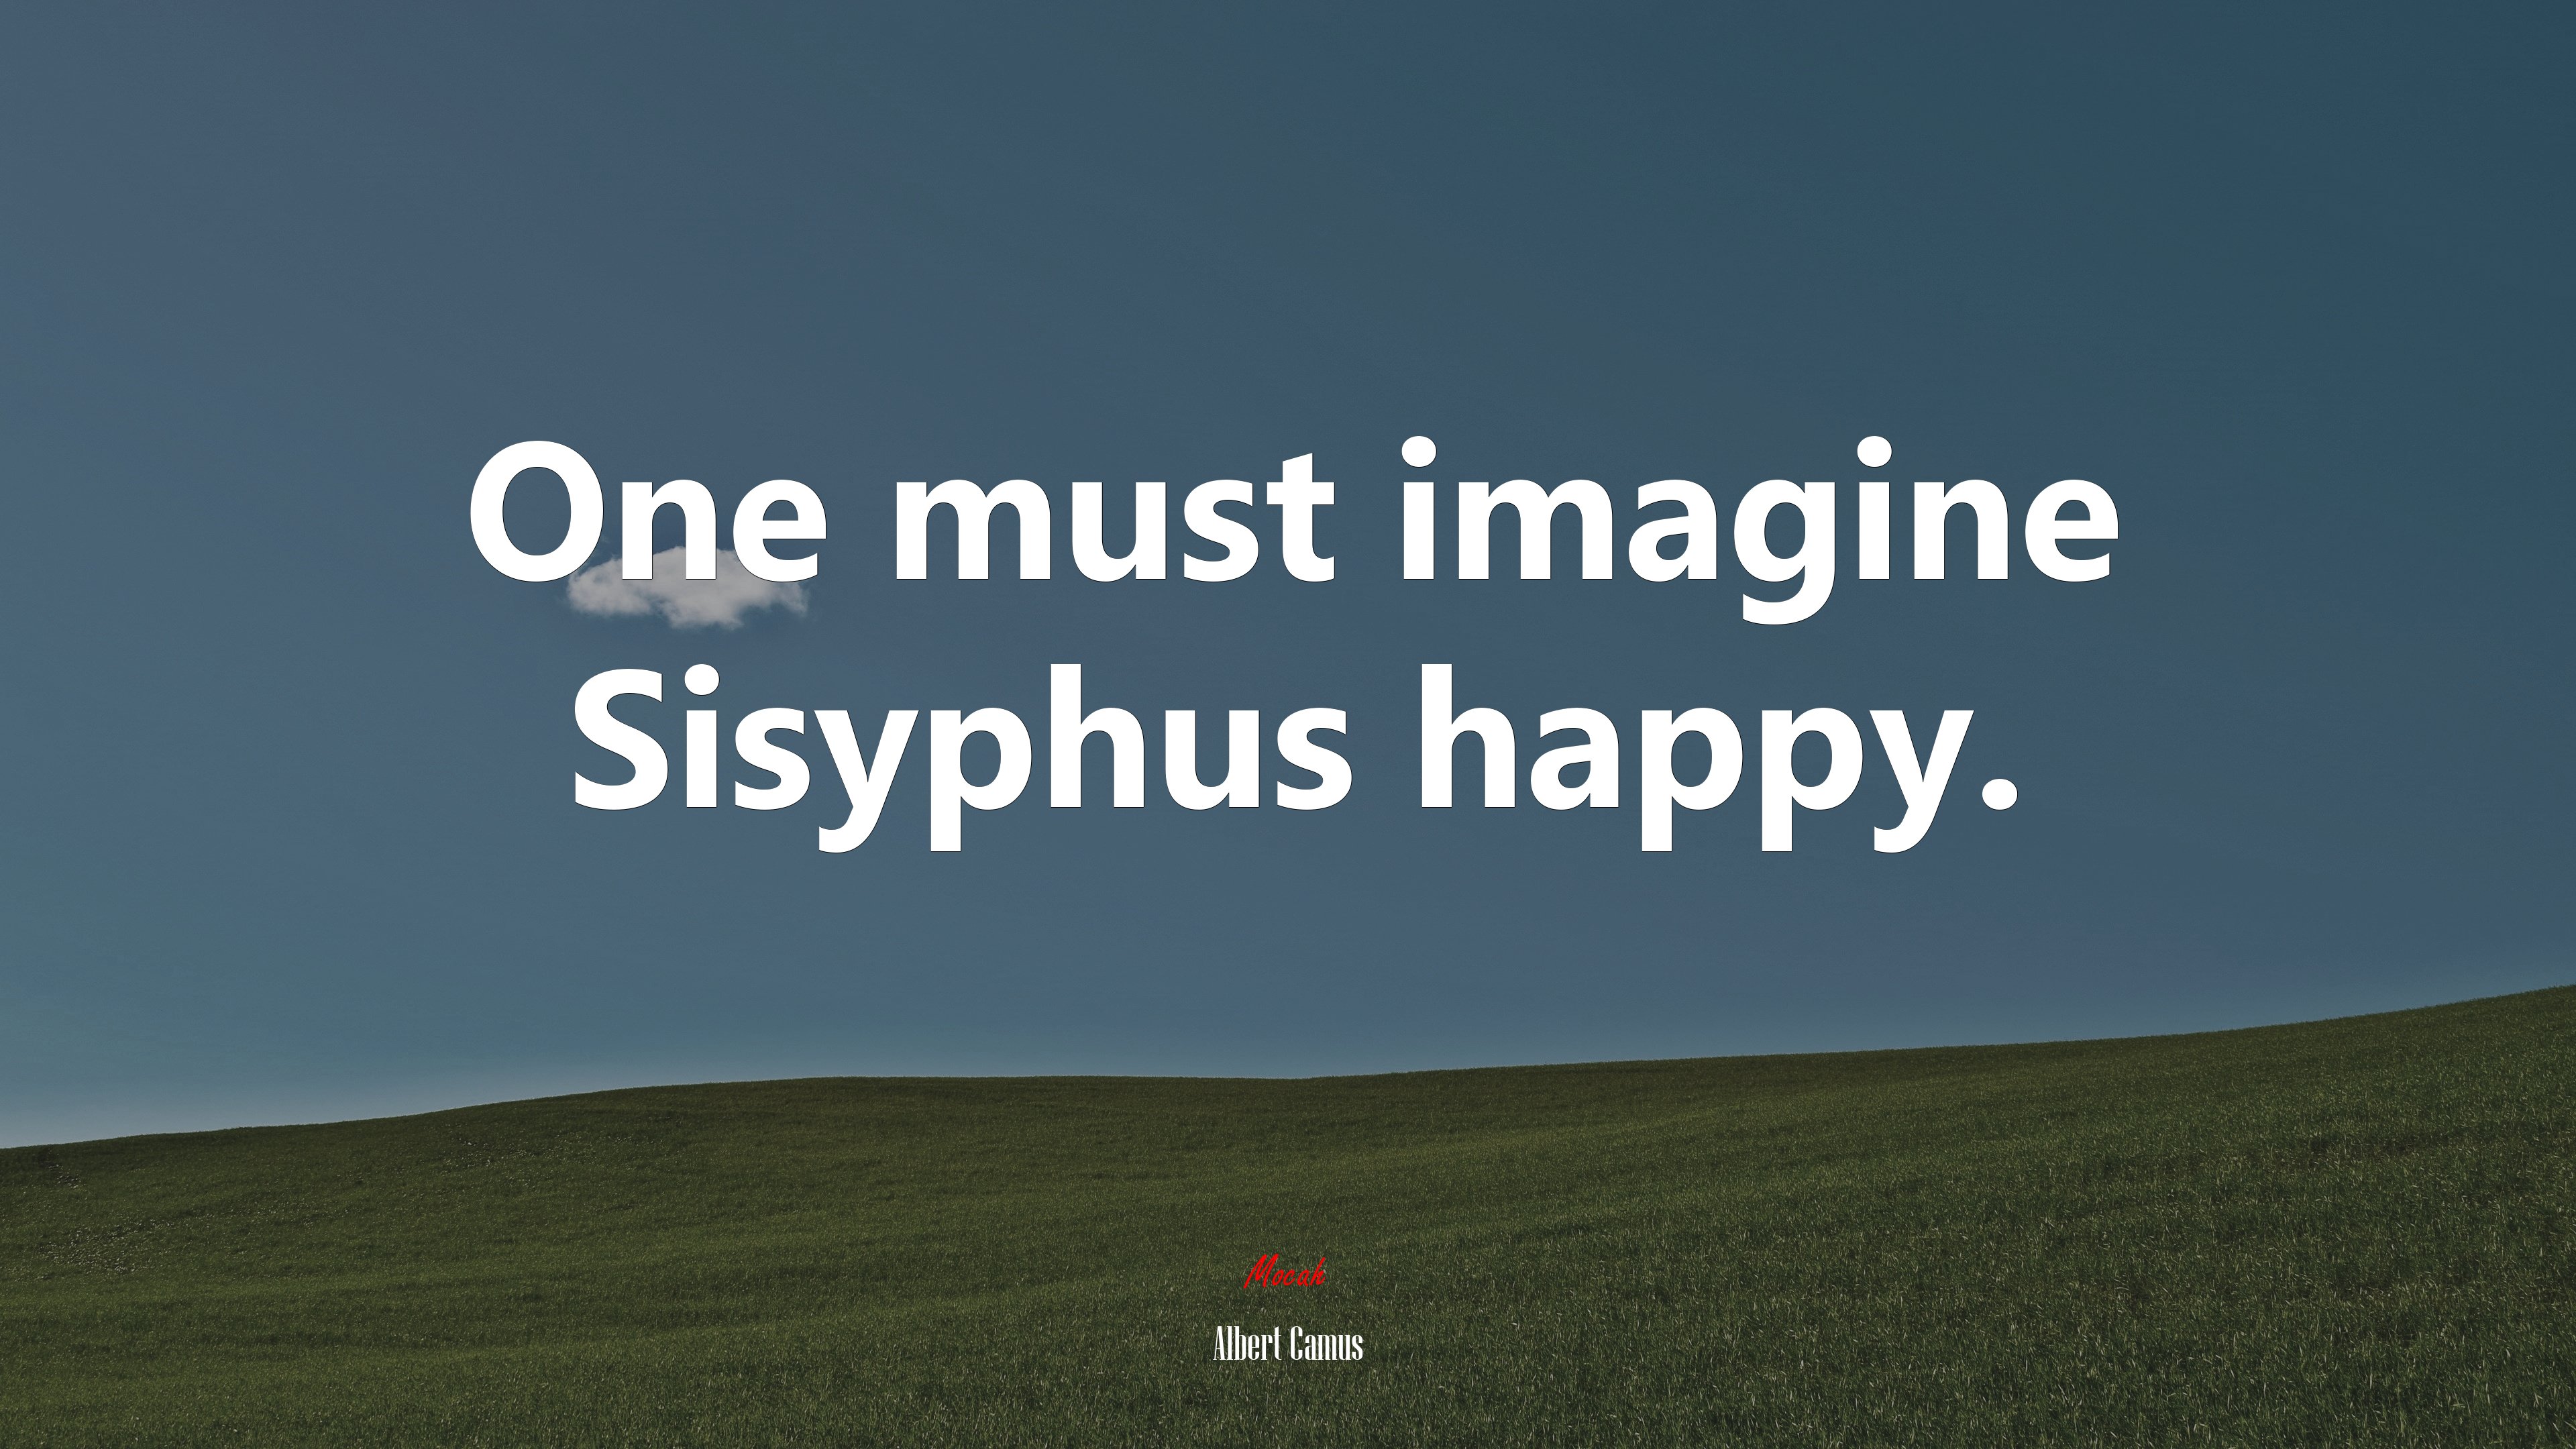 One must imagine Sisyphus happy. Albert Camus quote, 4k wallpaper. Mocah HD Wallpaper